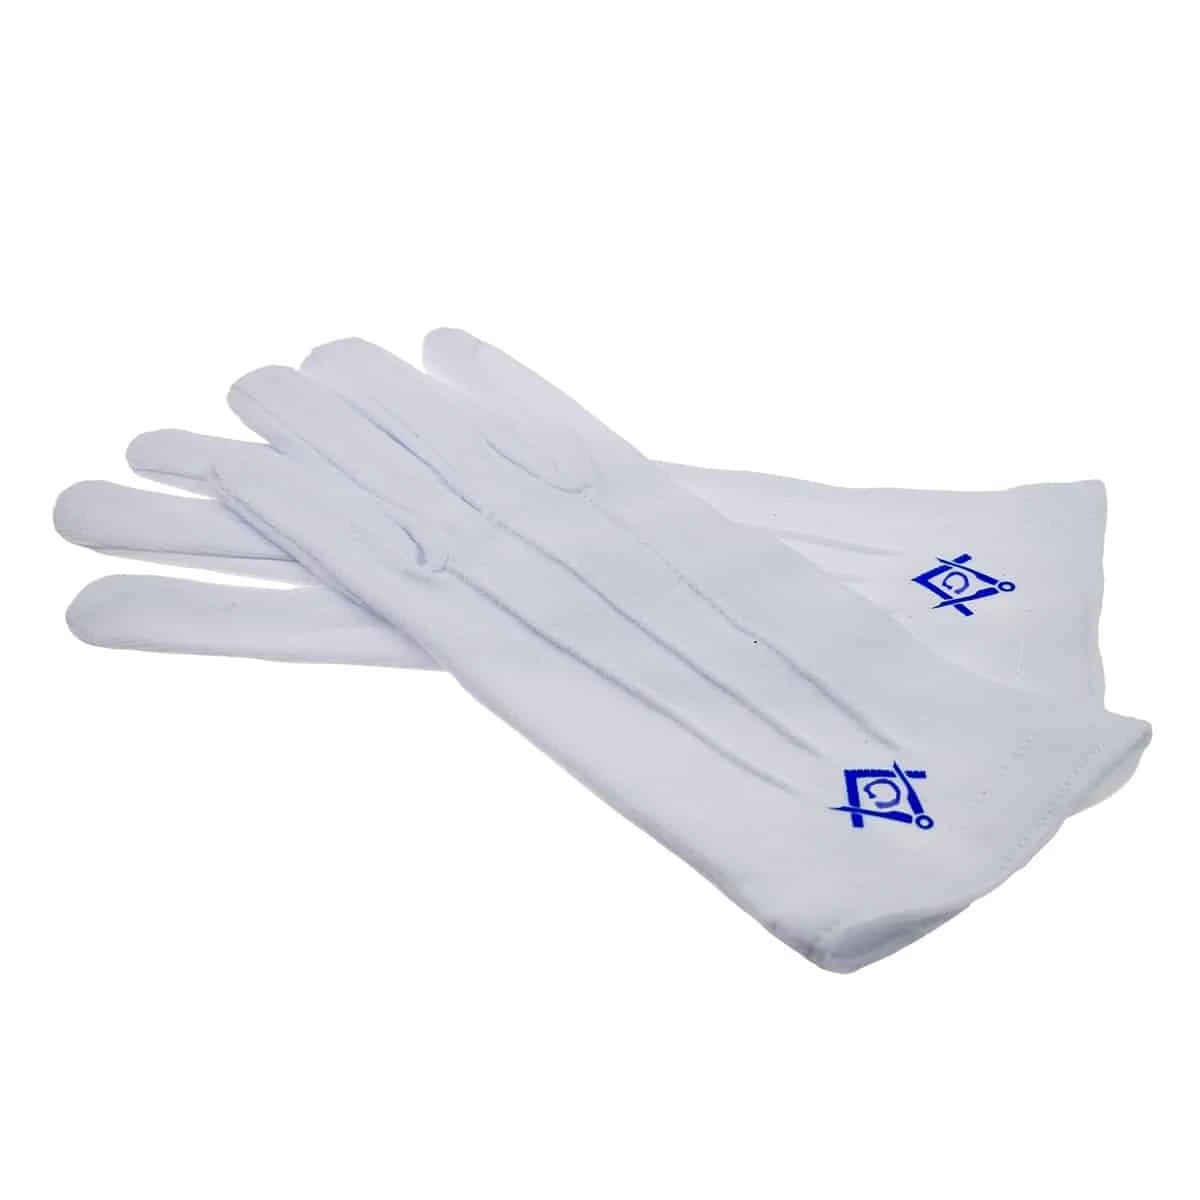 2022 High Quality Gloves Masonic Regalia Uniform Glove Custom Logo & Design Embroidery White Cotton Masonic Gloves Pakistan